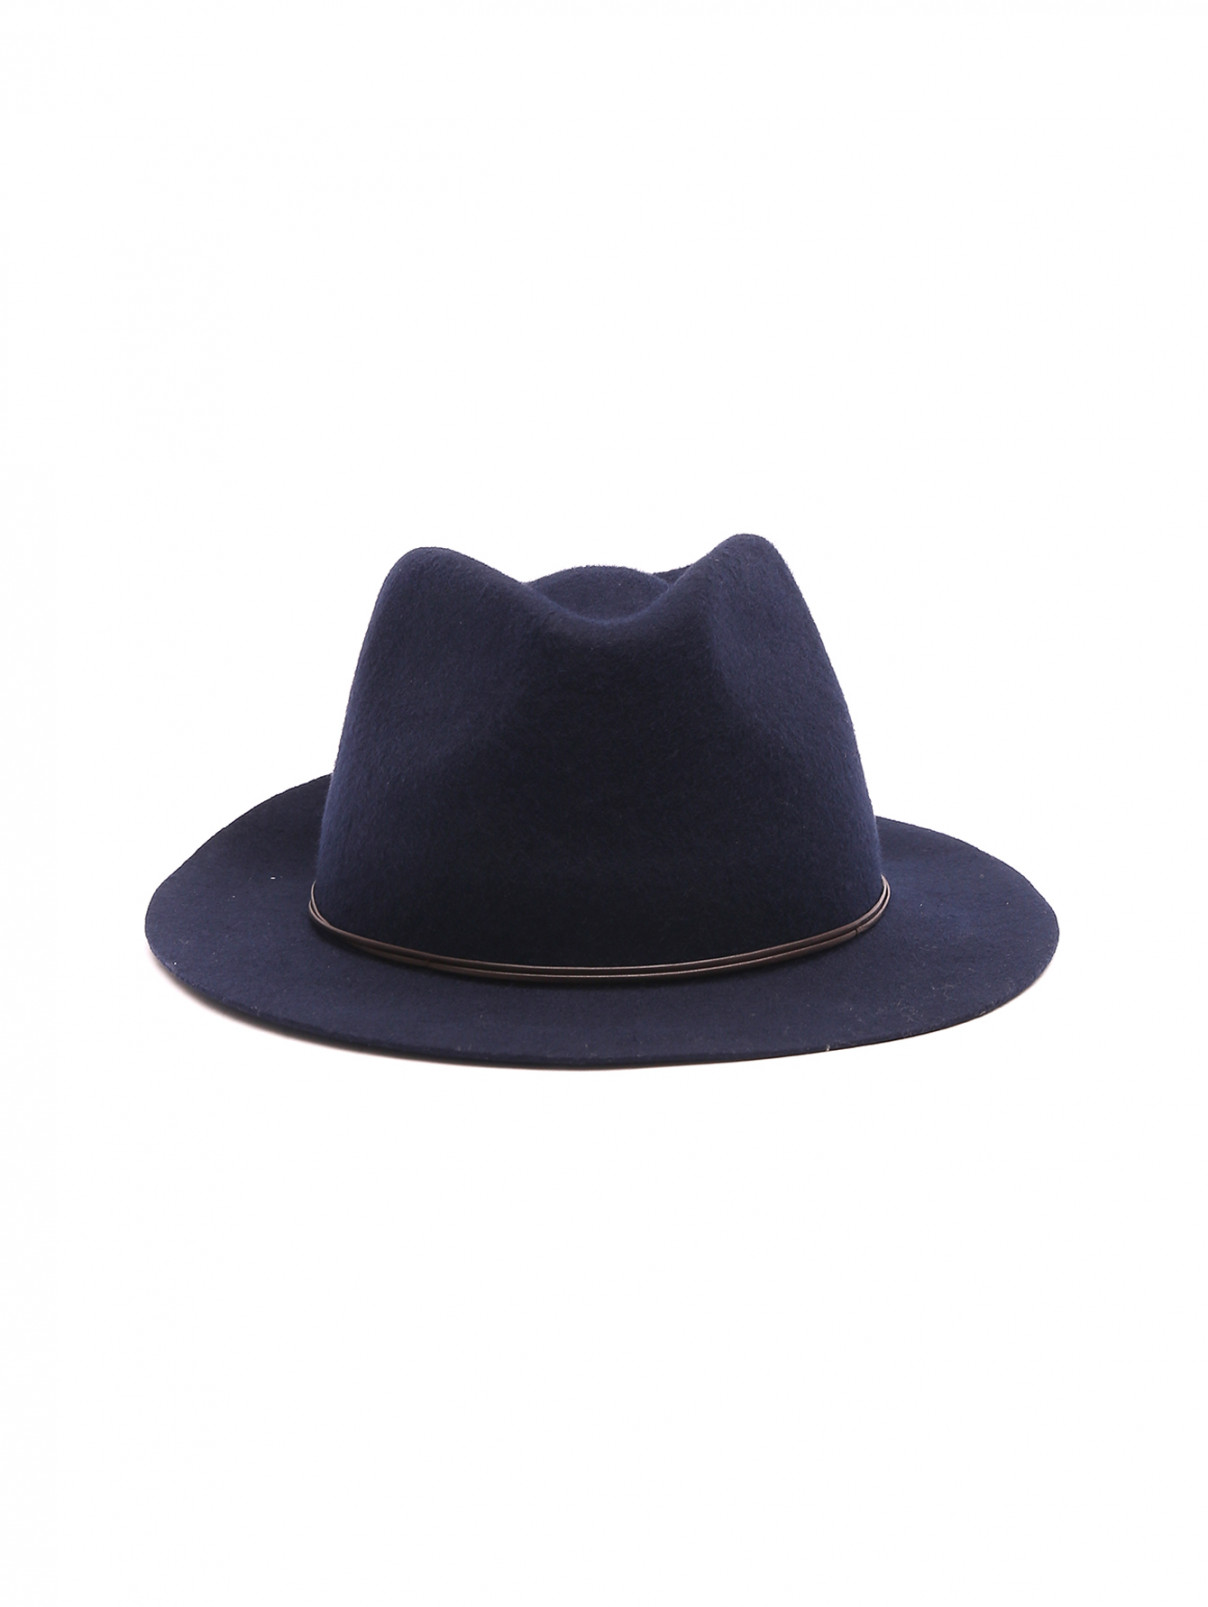 Шляпа из шерсти Weekend Max Mara  –  Общий вид  – Цвет:  Синий